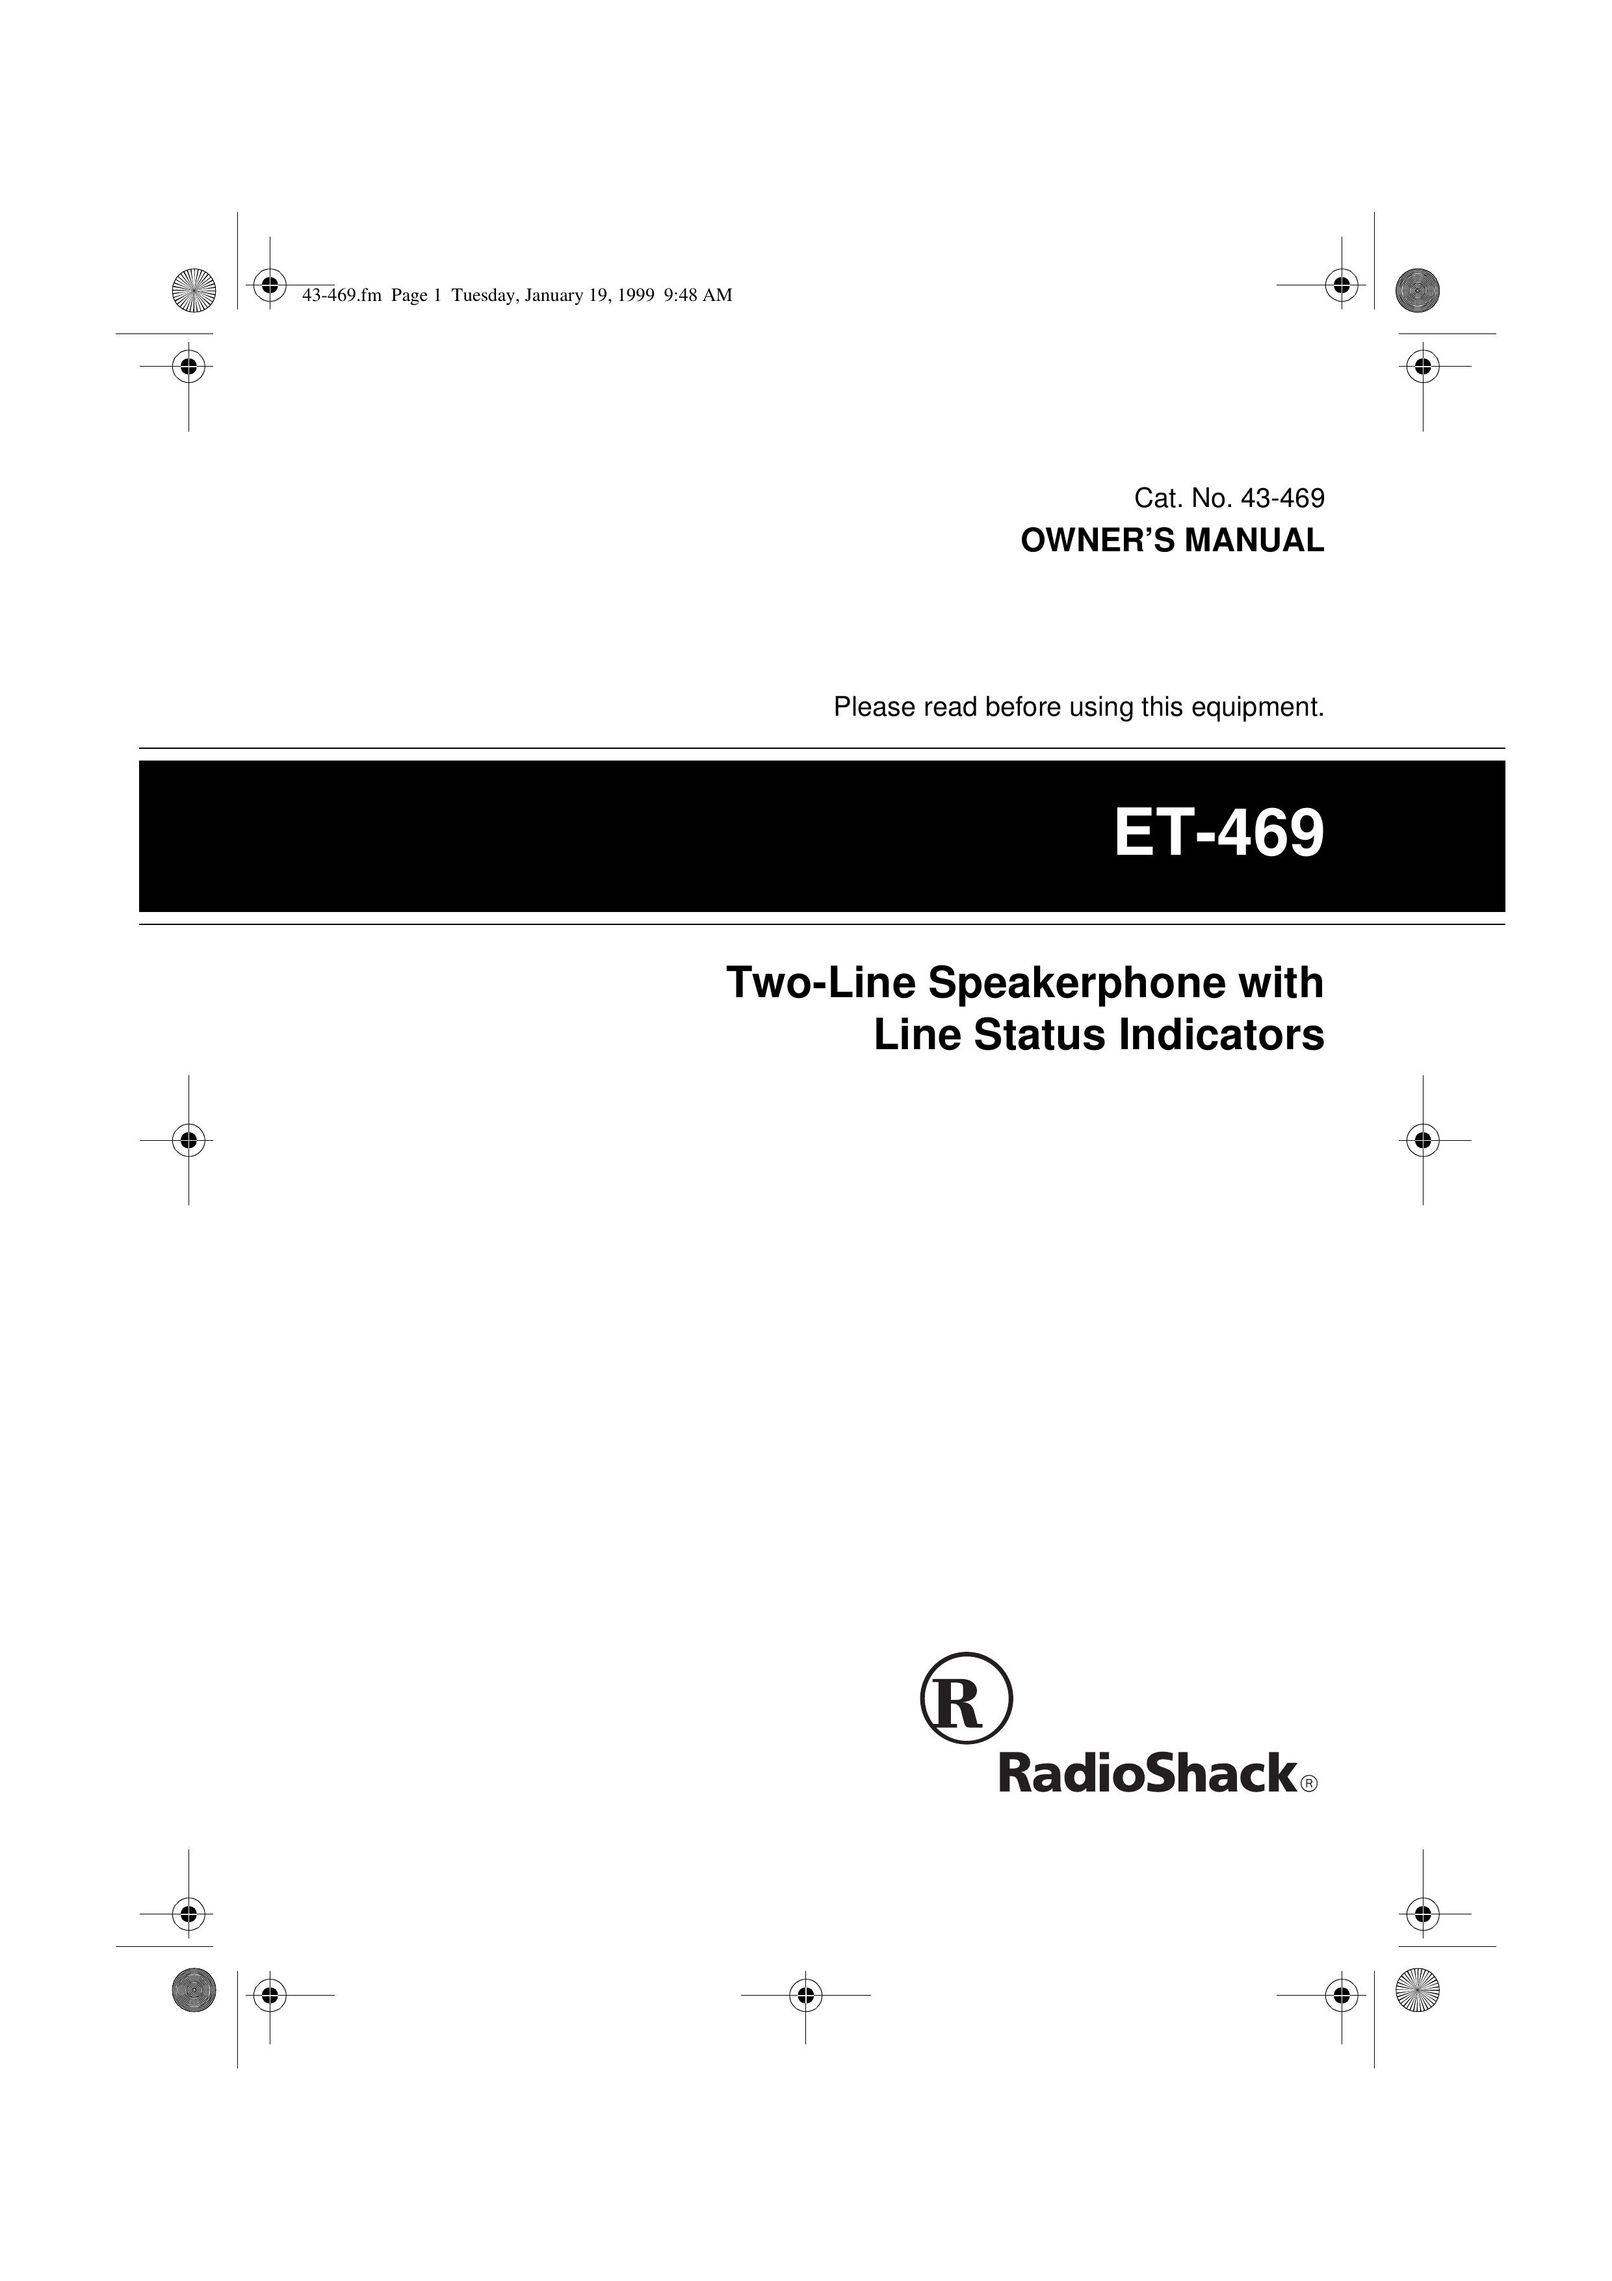 Radio Shack ET-469 Conference Phone User Manual